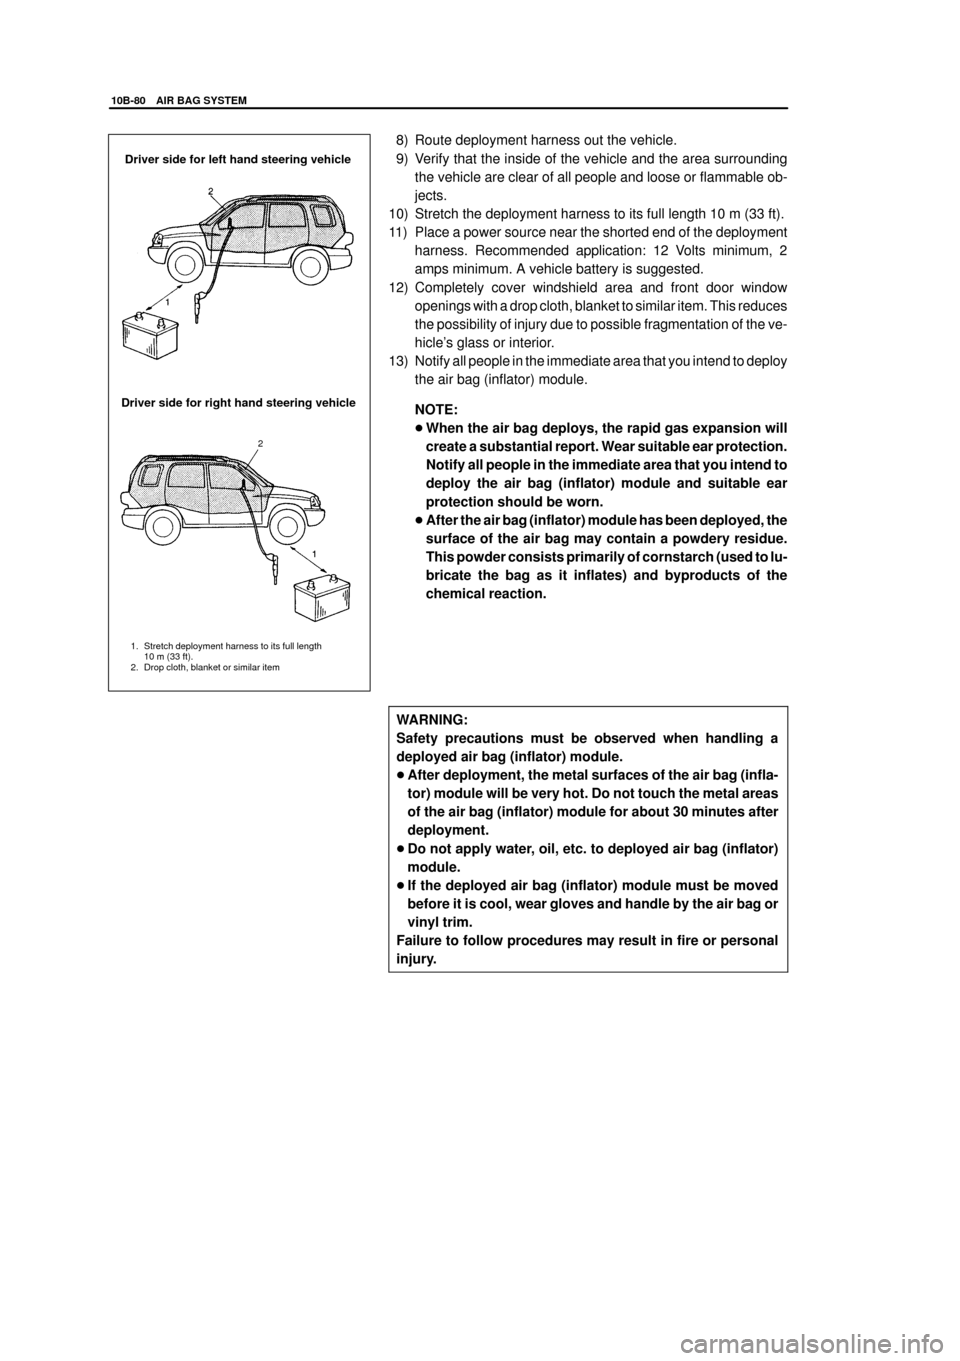 SUZUKI GRAND VITARA 1998 2.G Service Workshop Manual YH4
GRAND
VITARA
Driver side for left hand steering vehicle
Driver side for right hand steering vehicle
1. Stretch deployment harness to its full length 
10 m (33 ft).
2. Drop cloth, blanket or simila